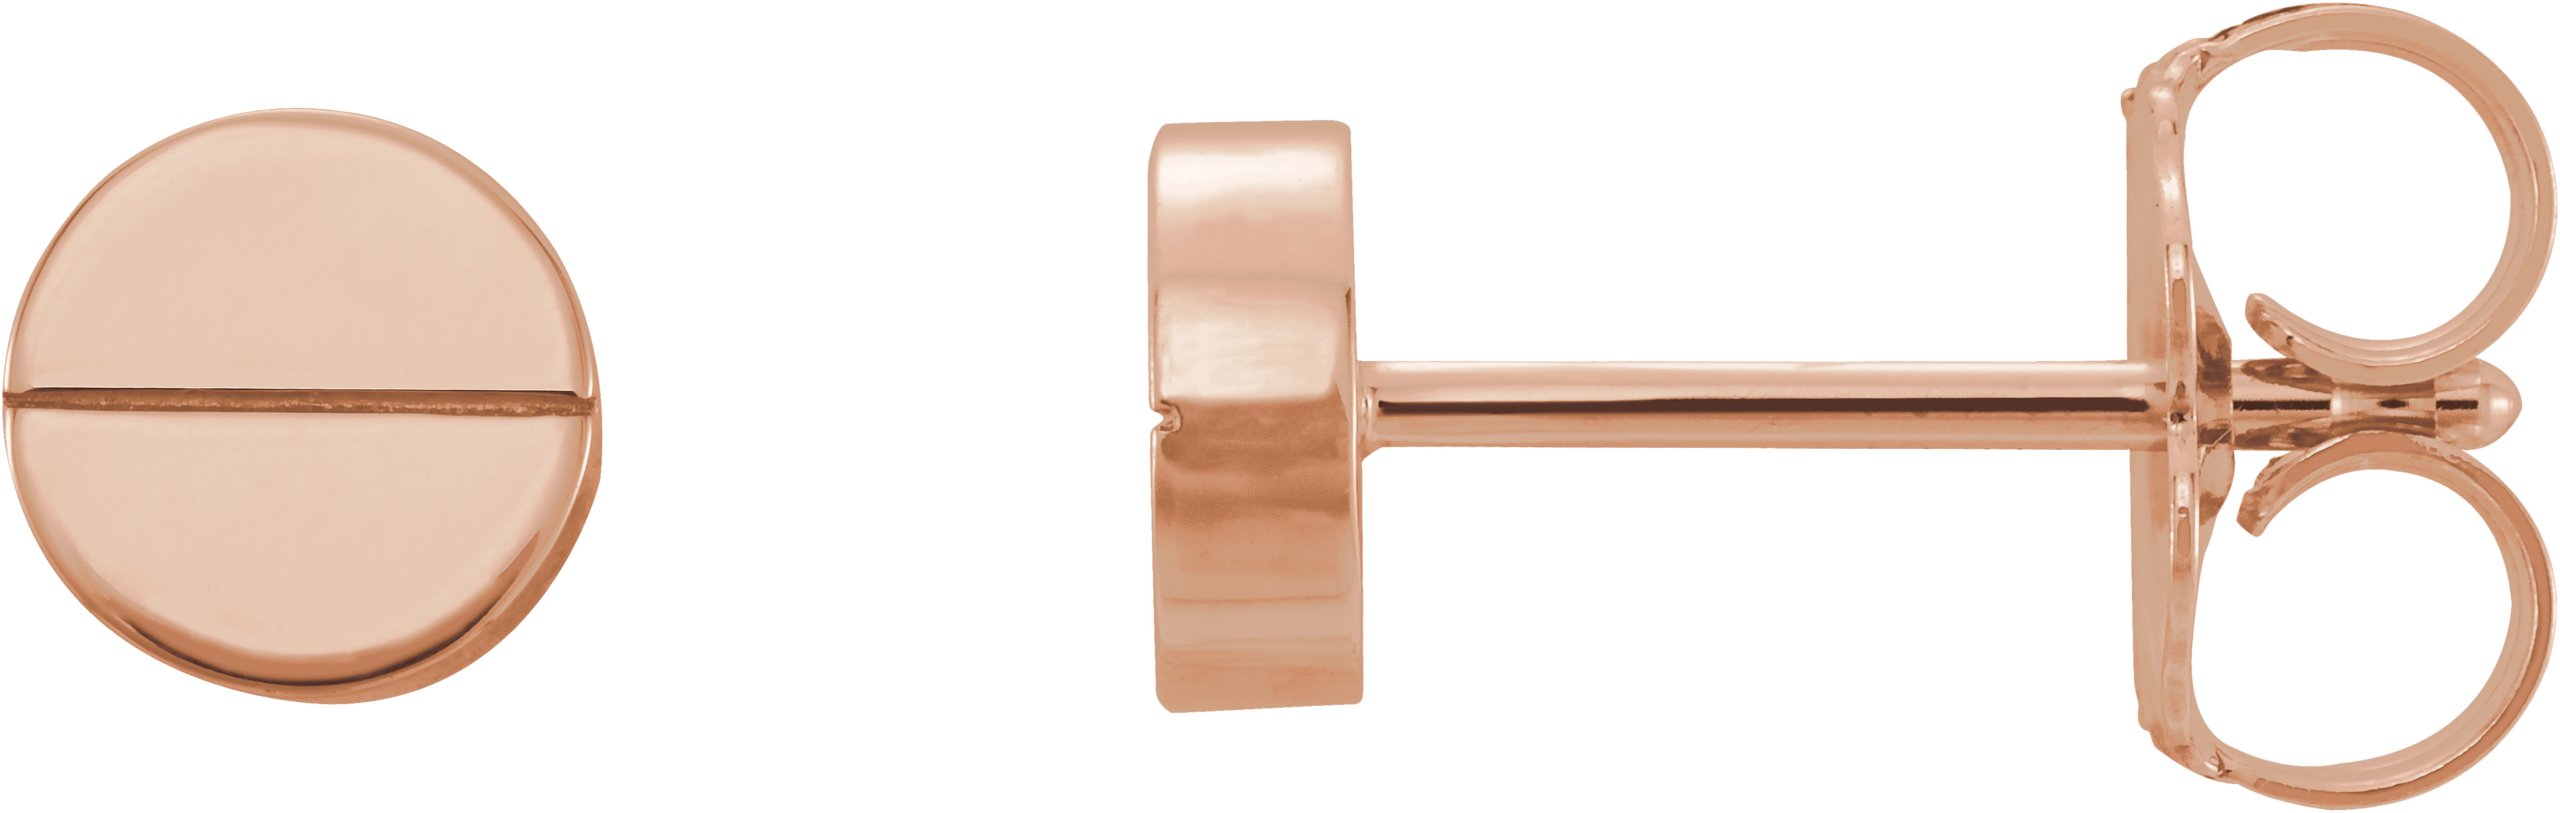 14K Rose 4.9 mm Geometric Friction Closure Earrings